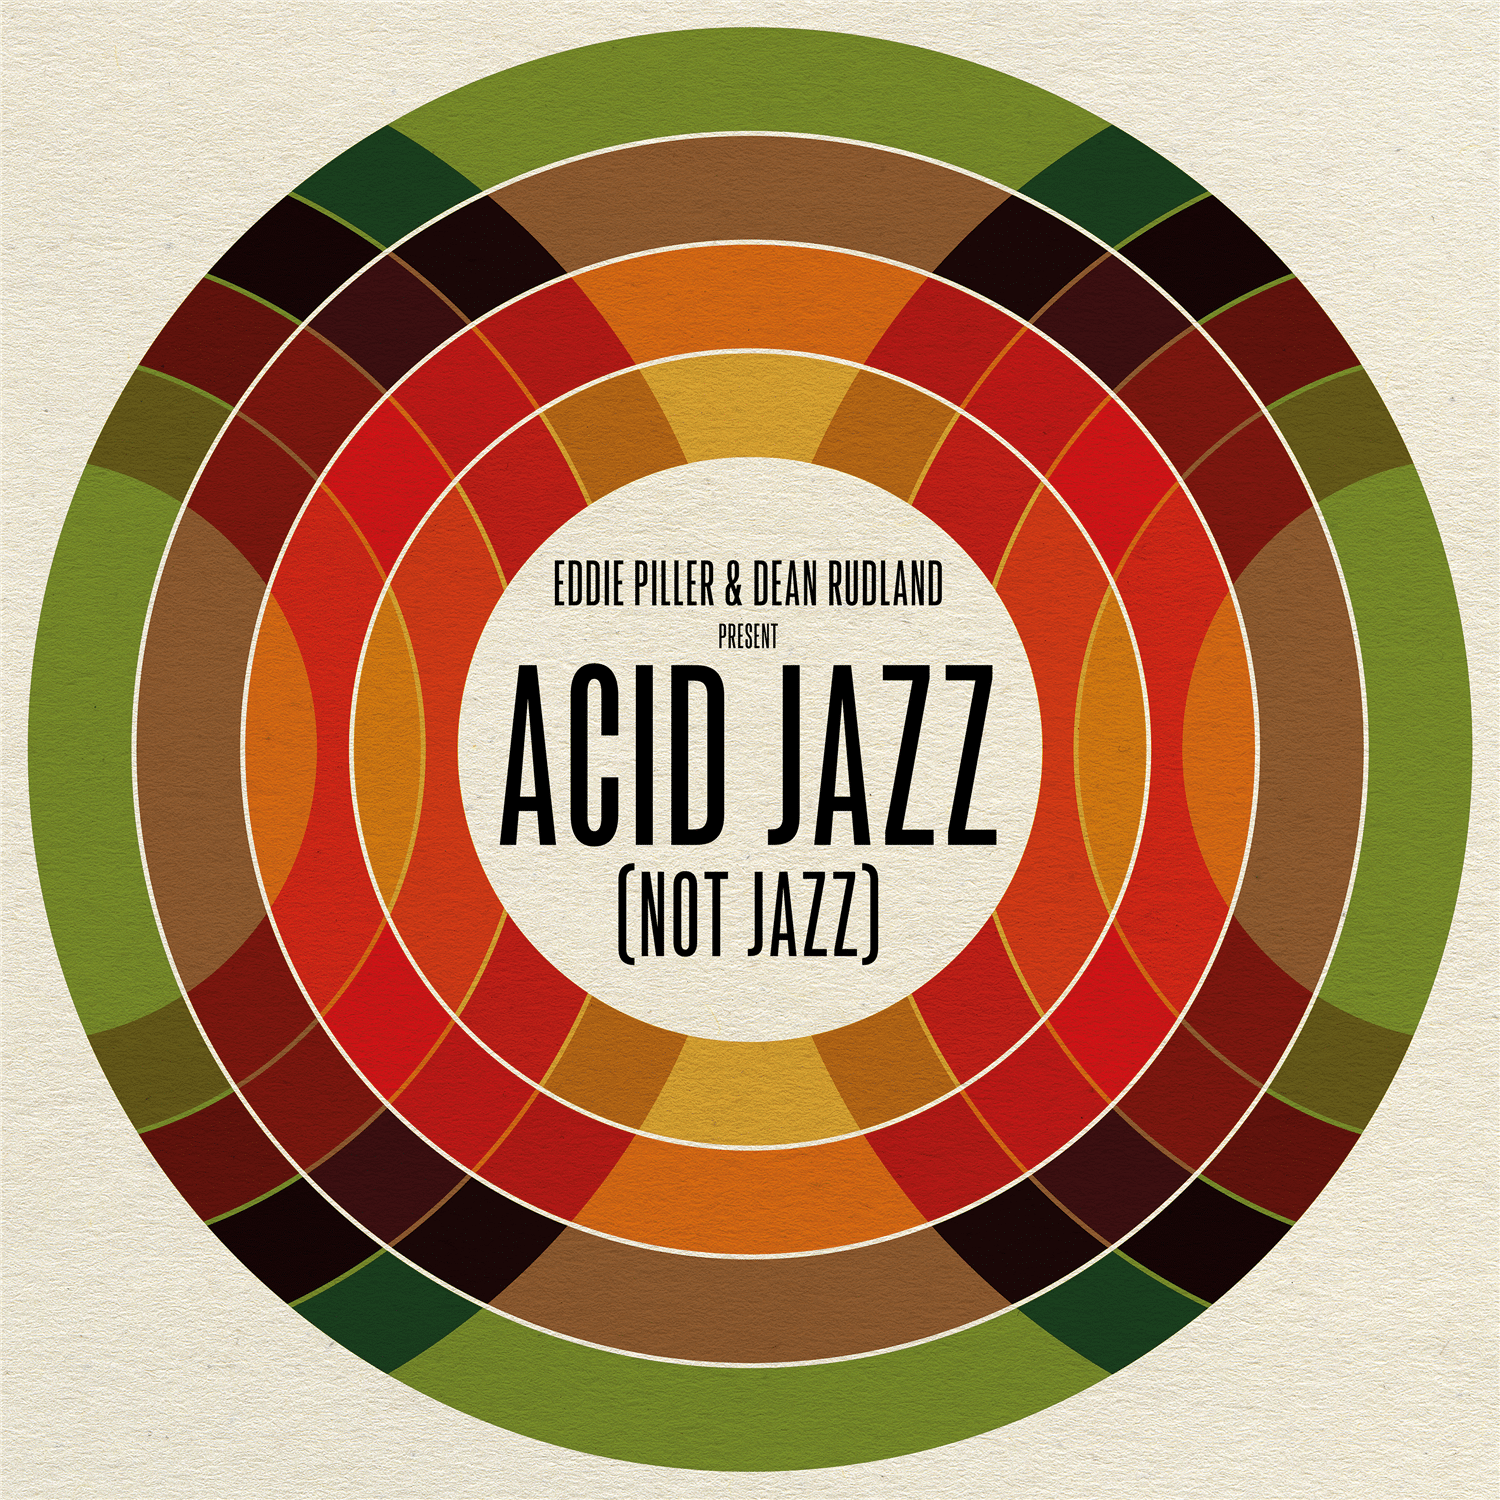 VARIOUS ARTISTS -Eddie Piller & Dean Rudland present: Acid Jazz (Not Jazz)